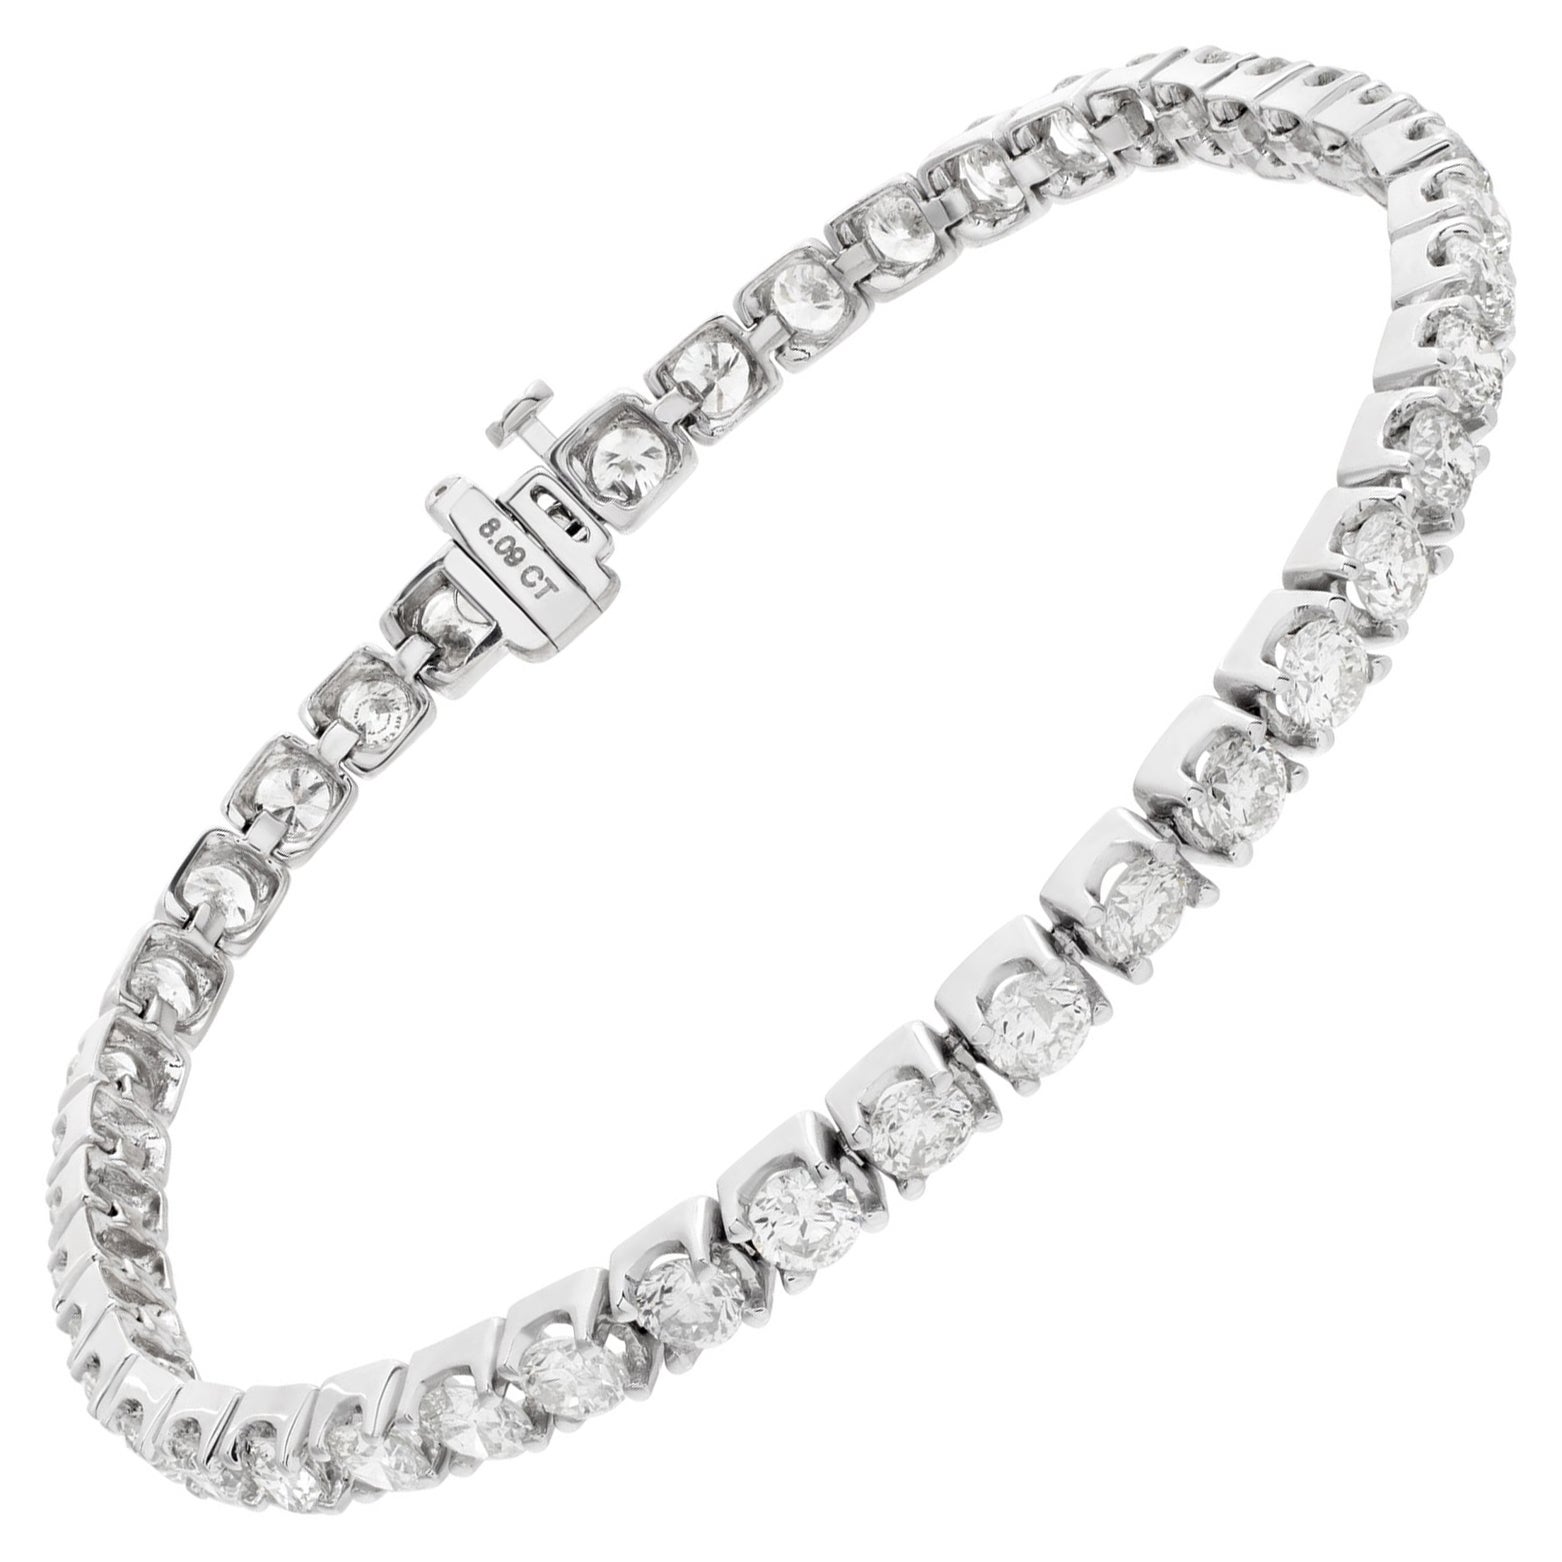 Line Diamond Bracelet with 8.09 Carat Full Cut Round Diamonds Set